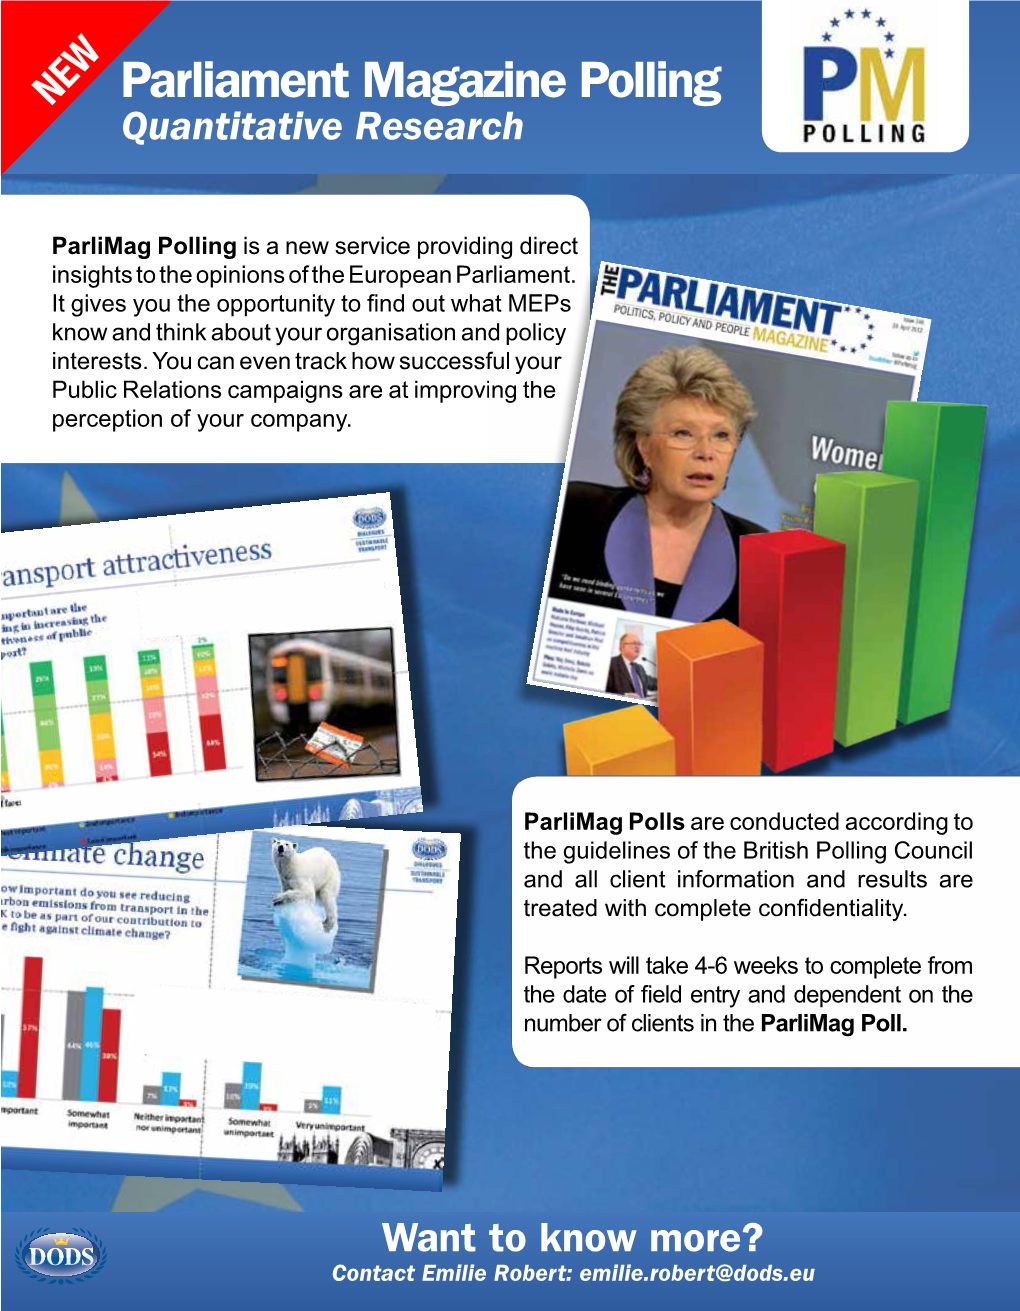 Parliament Magazine Polling Quantitative Research